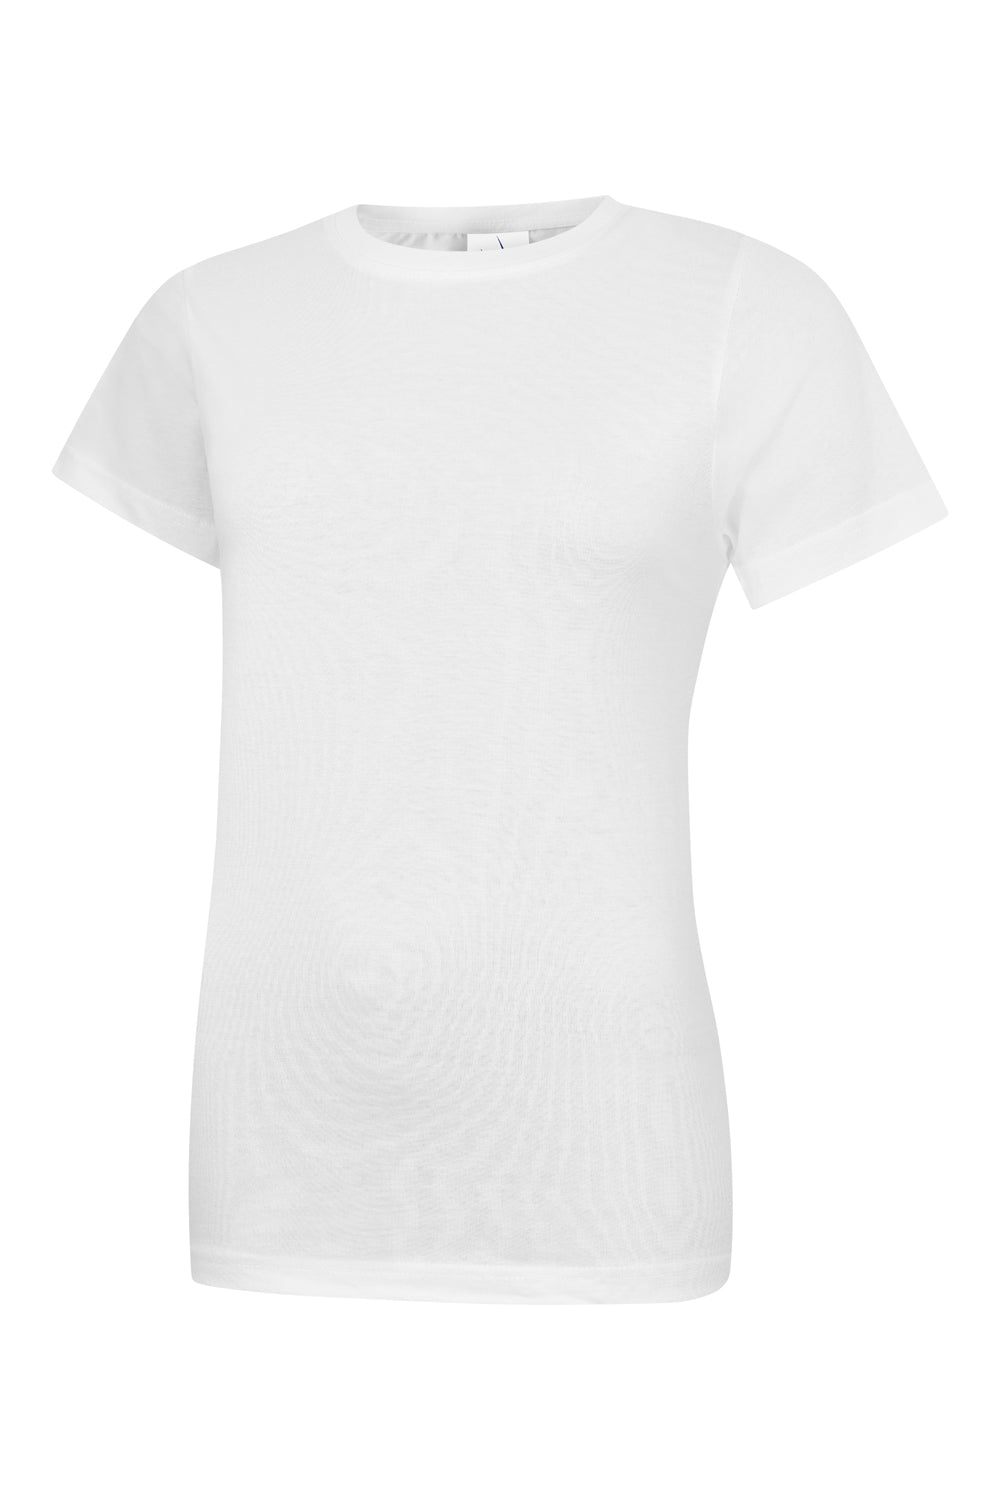 Uneek Ladies Classic Crew Neck T-Shirt UC318 - White